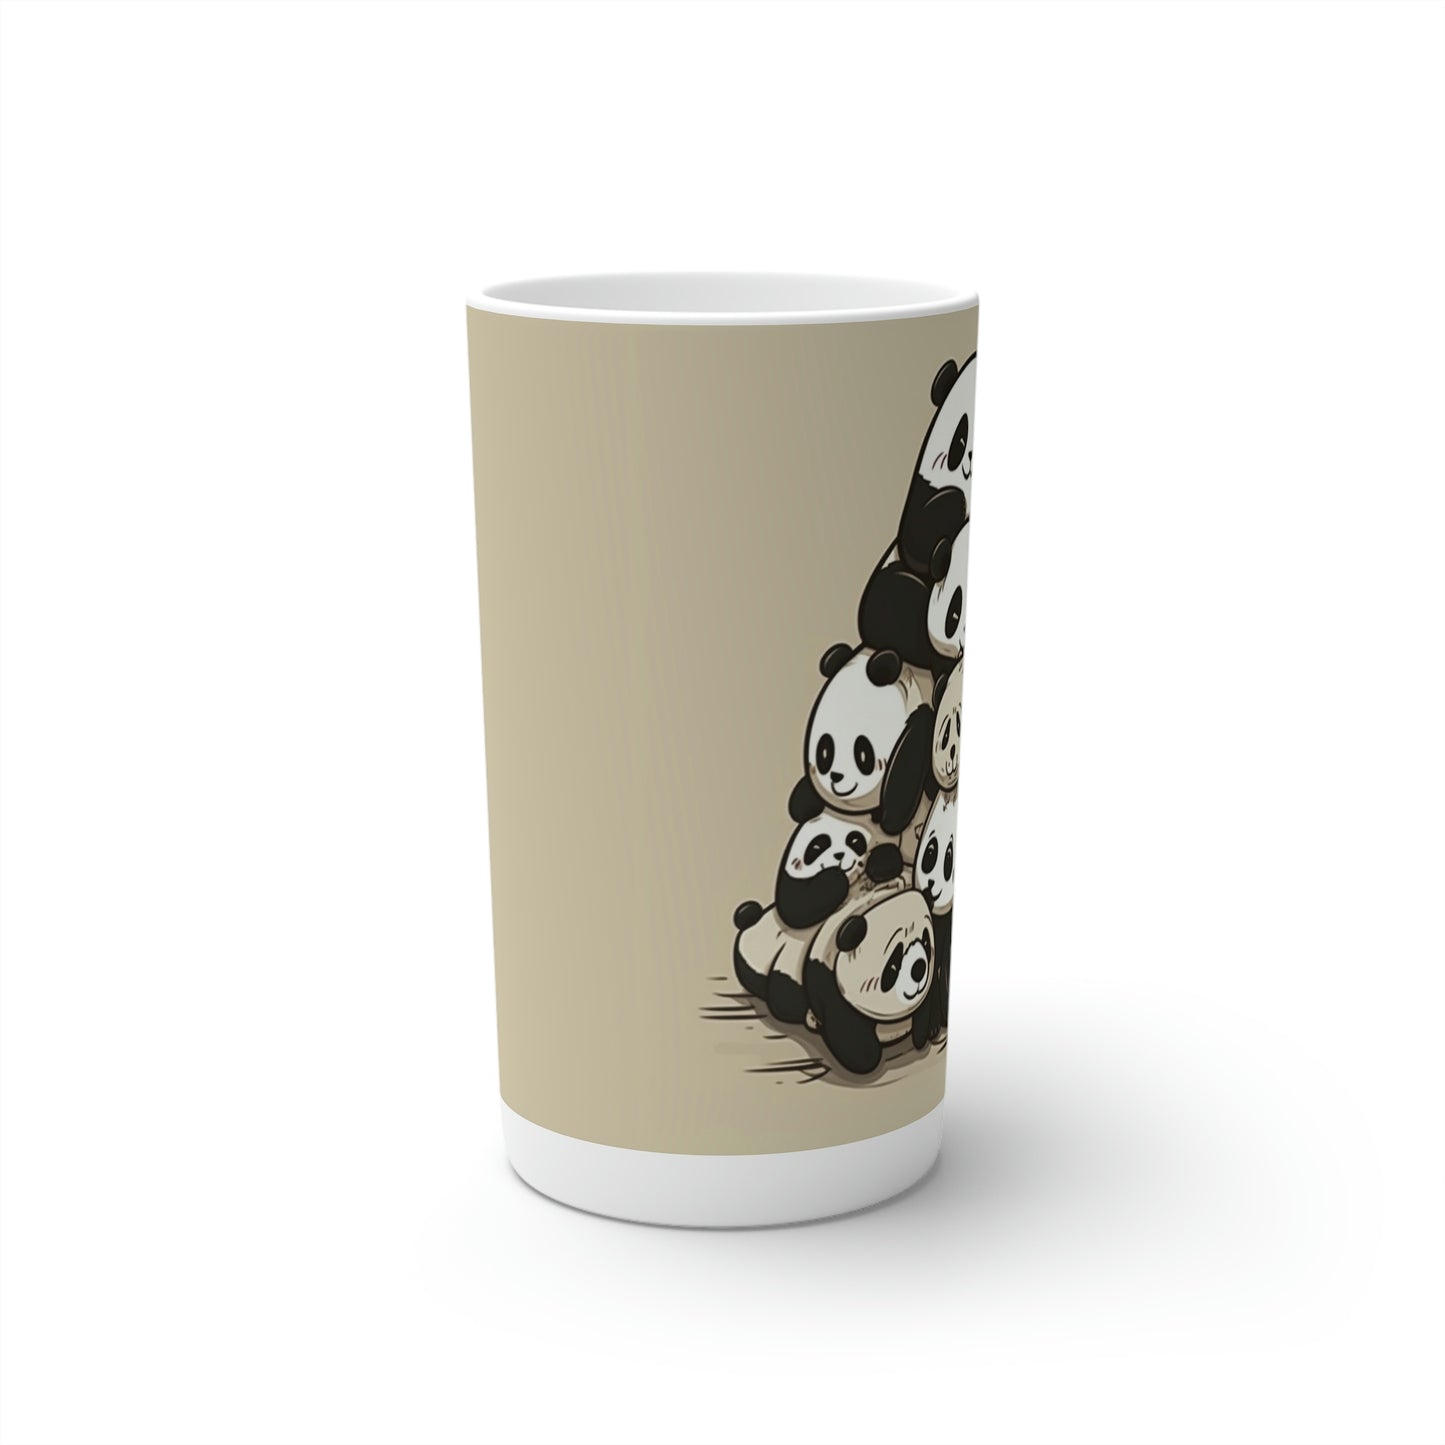 Panda Pile-Up Conical Coffee Mugs